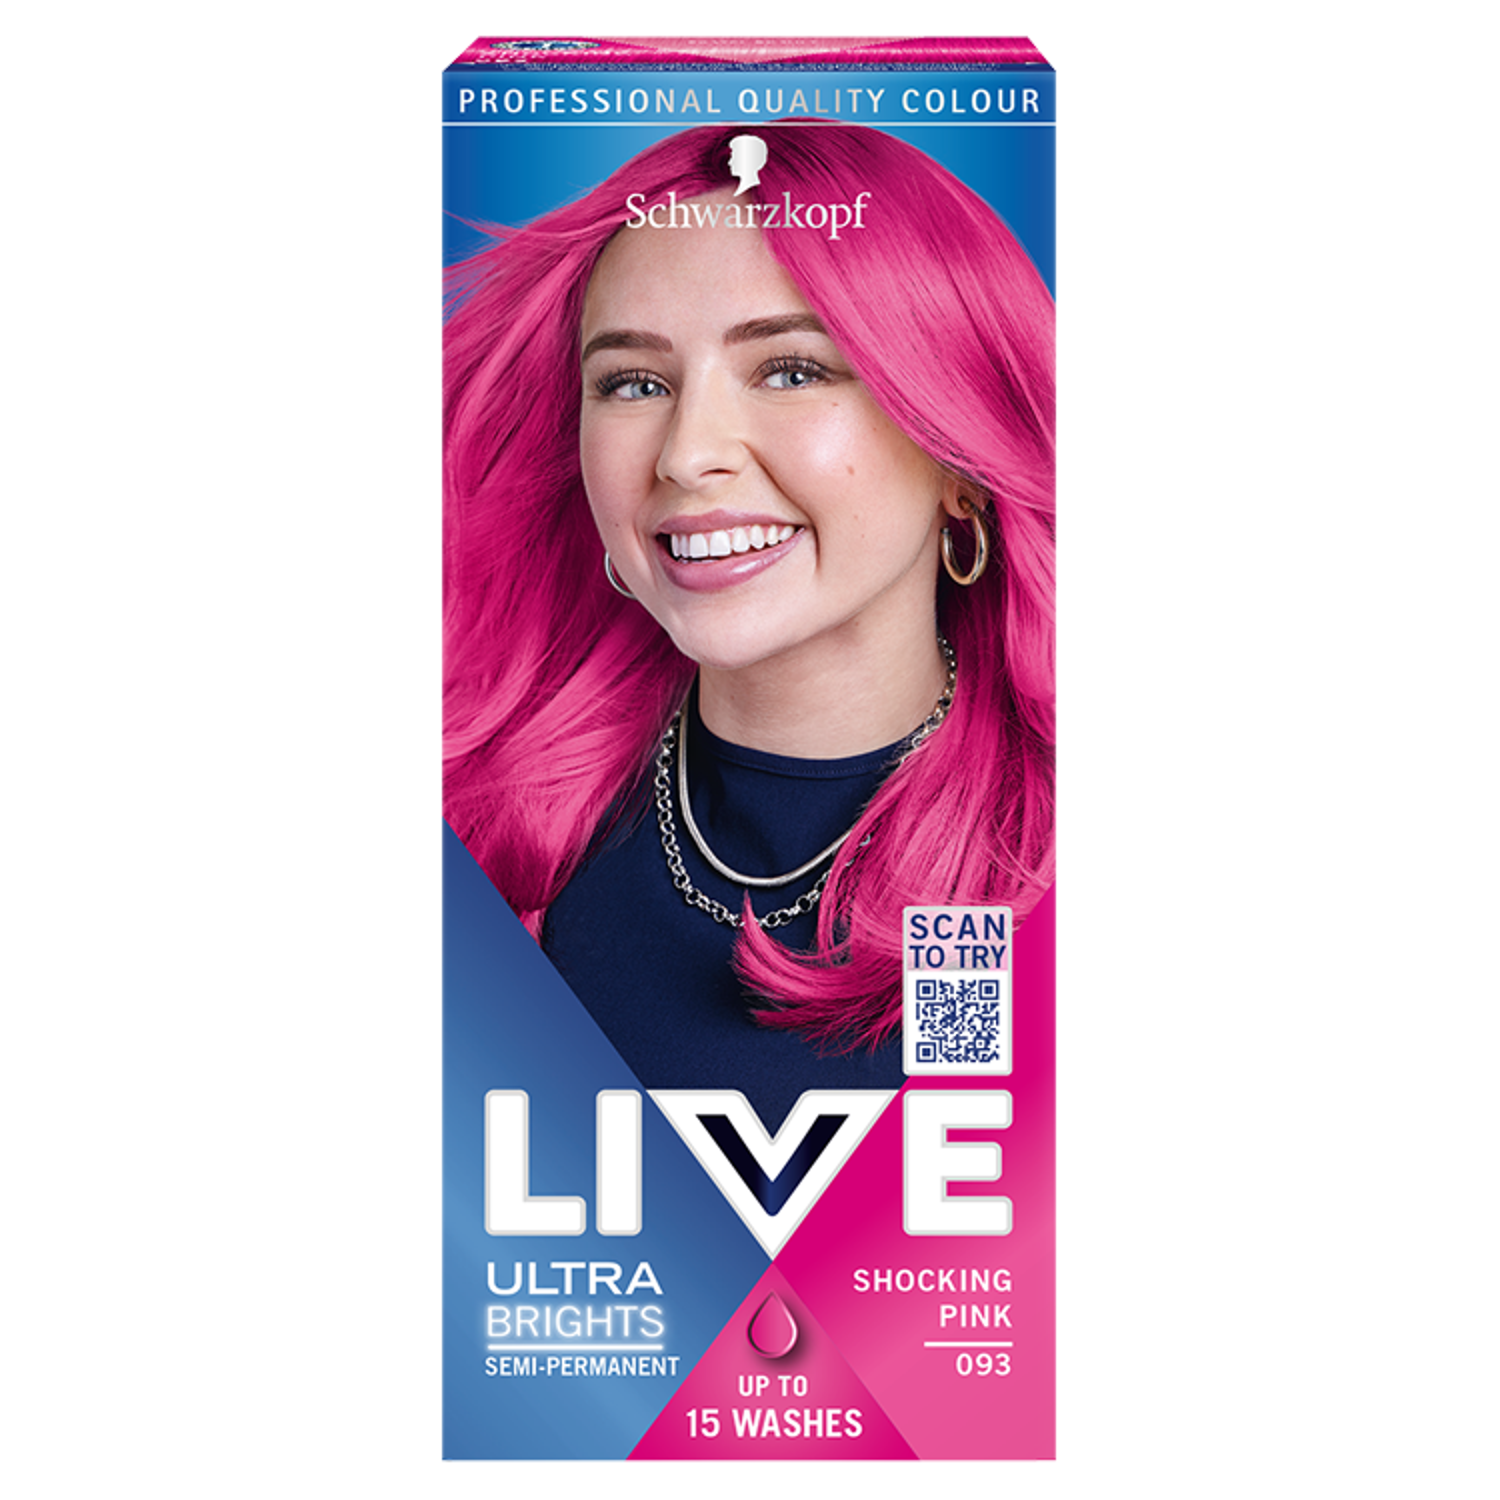 Live Ultra Brights or Pastel farba do włosów shocking pink 093, 1 opak. |  hebe.pl